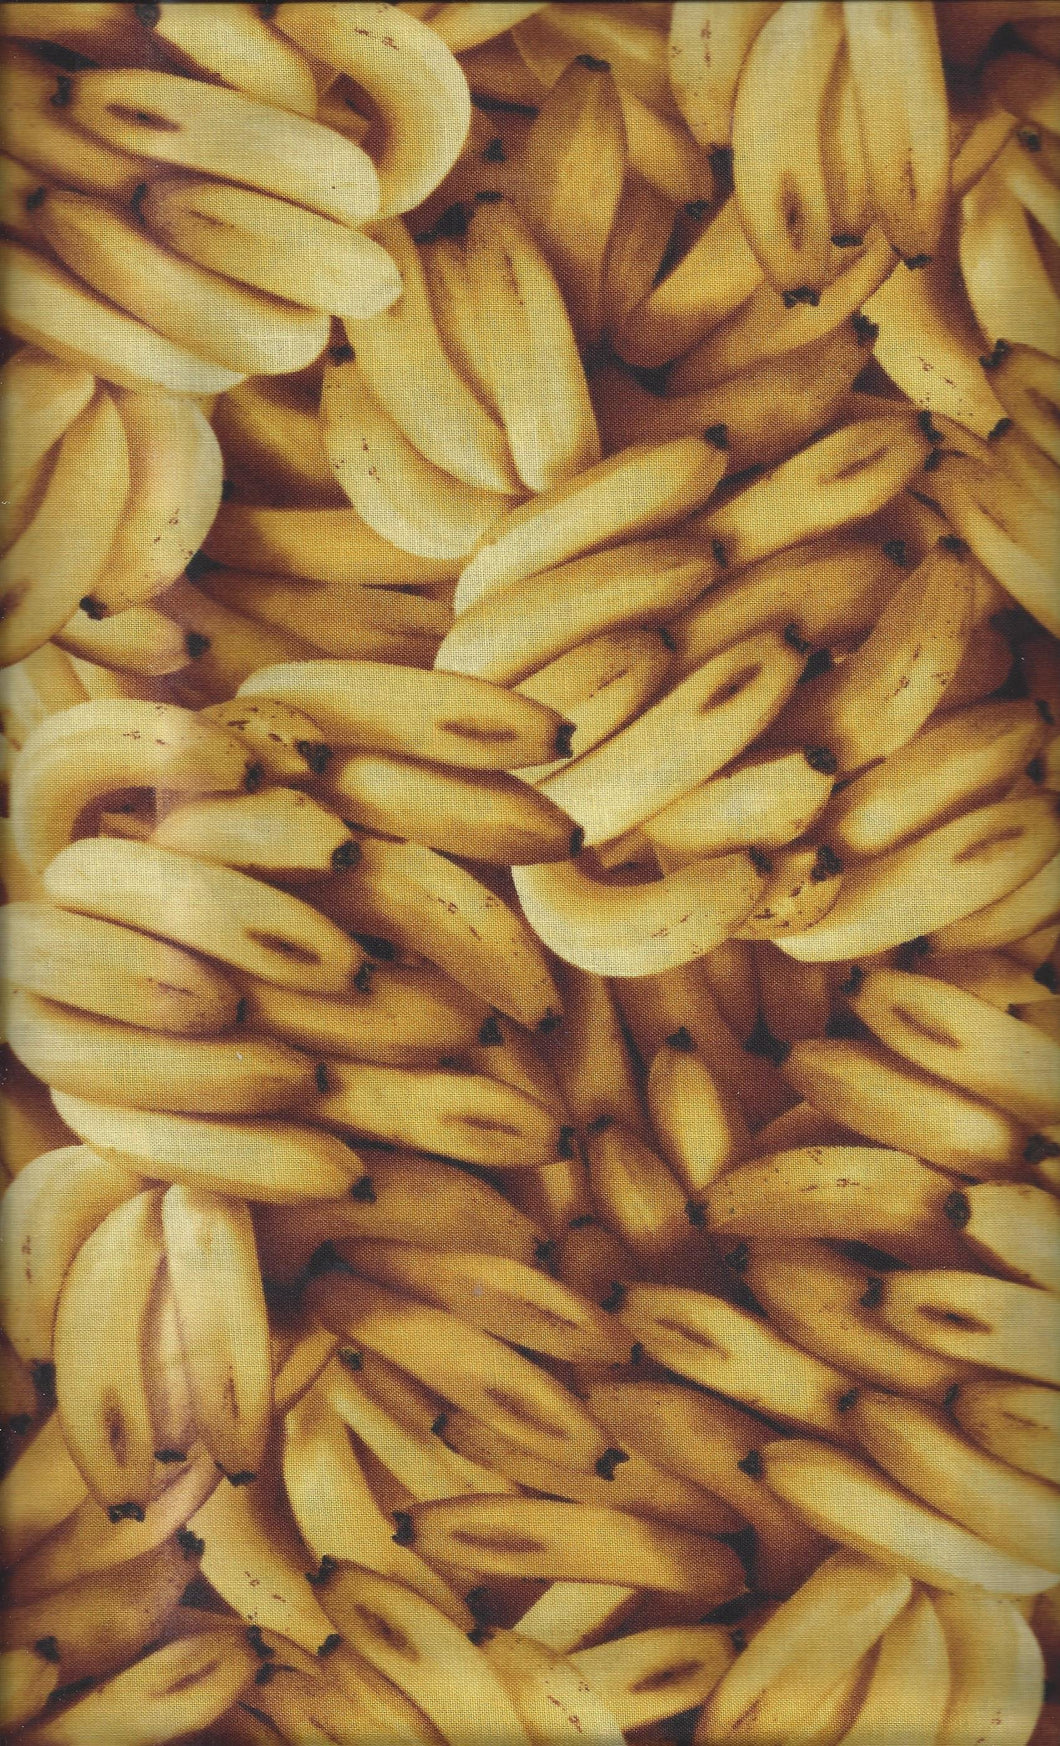 Farmer's Market Bananas ed508